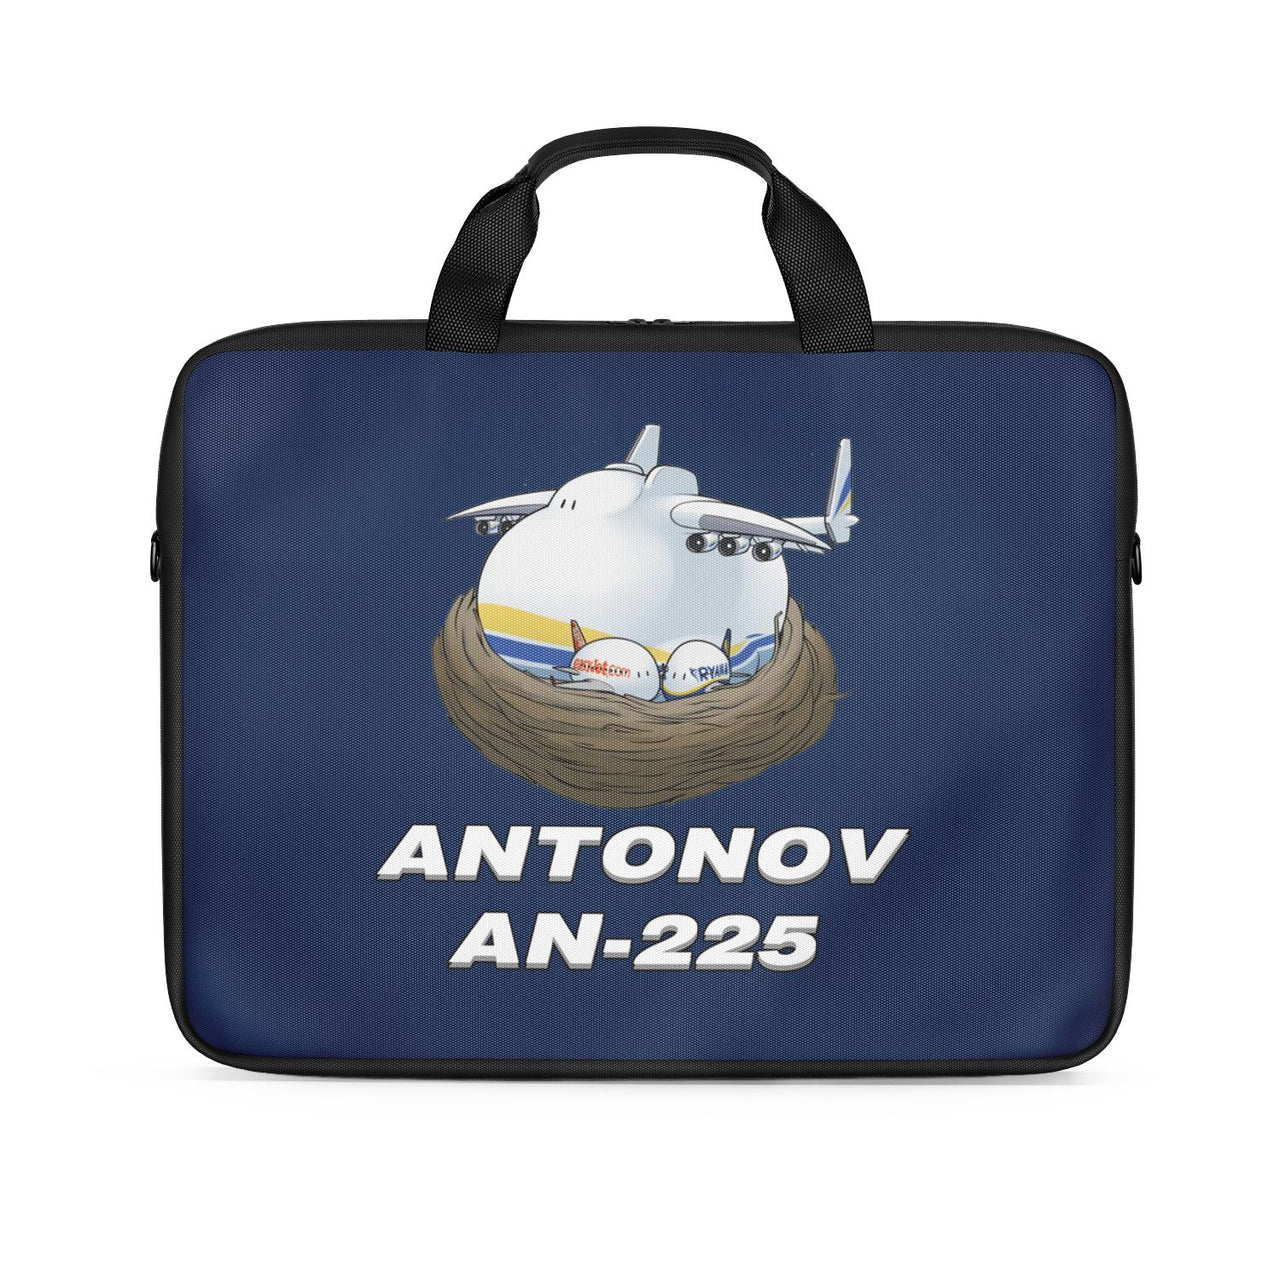 Antonov AN-225 (22) Designed Laptop & Tablet Bags